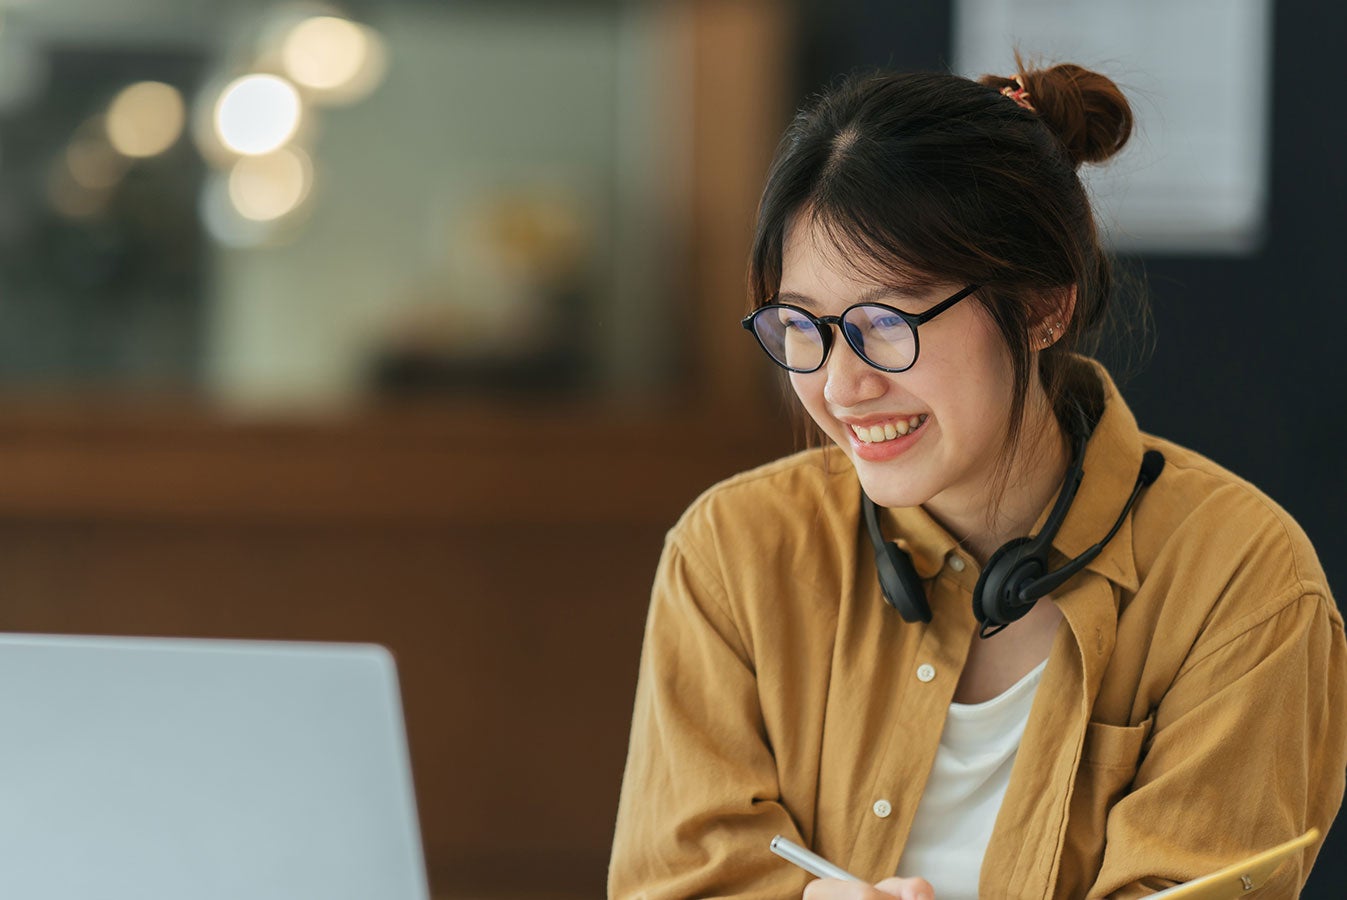 Student wearing headphones smiling at laptop screen.